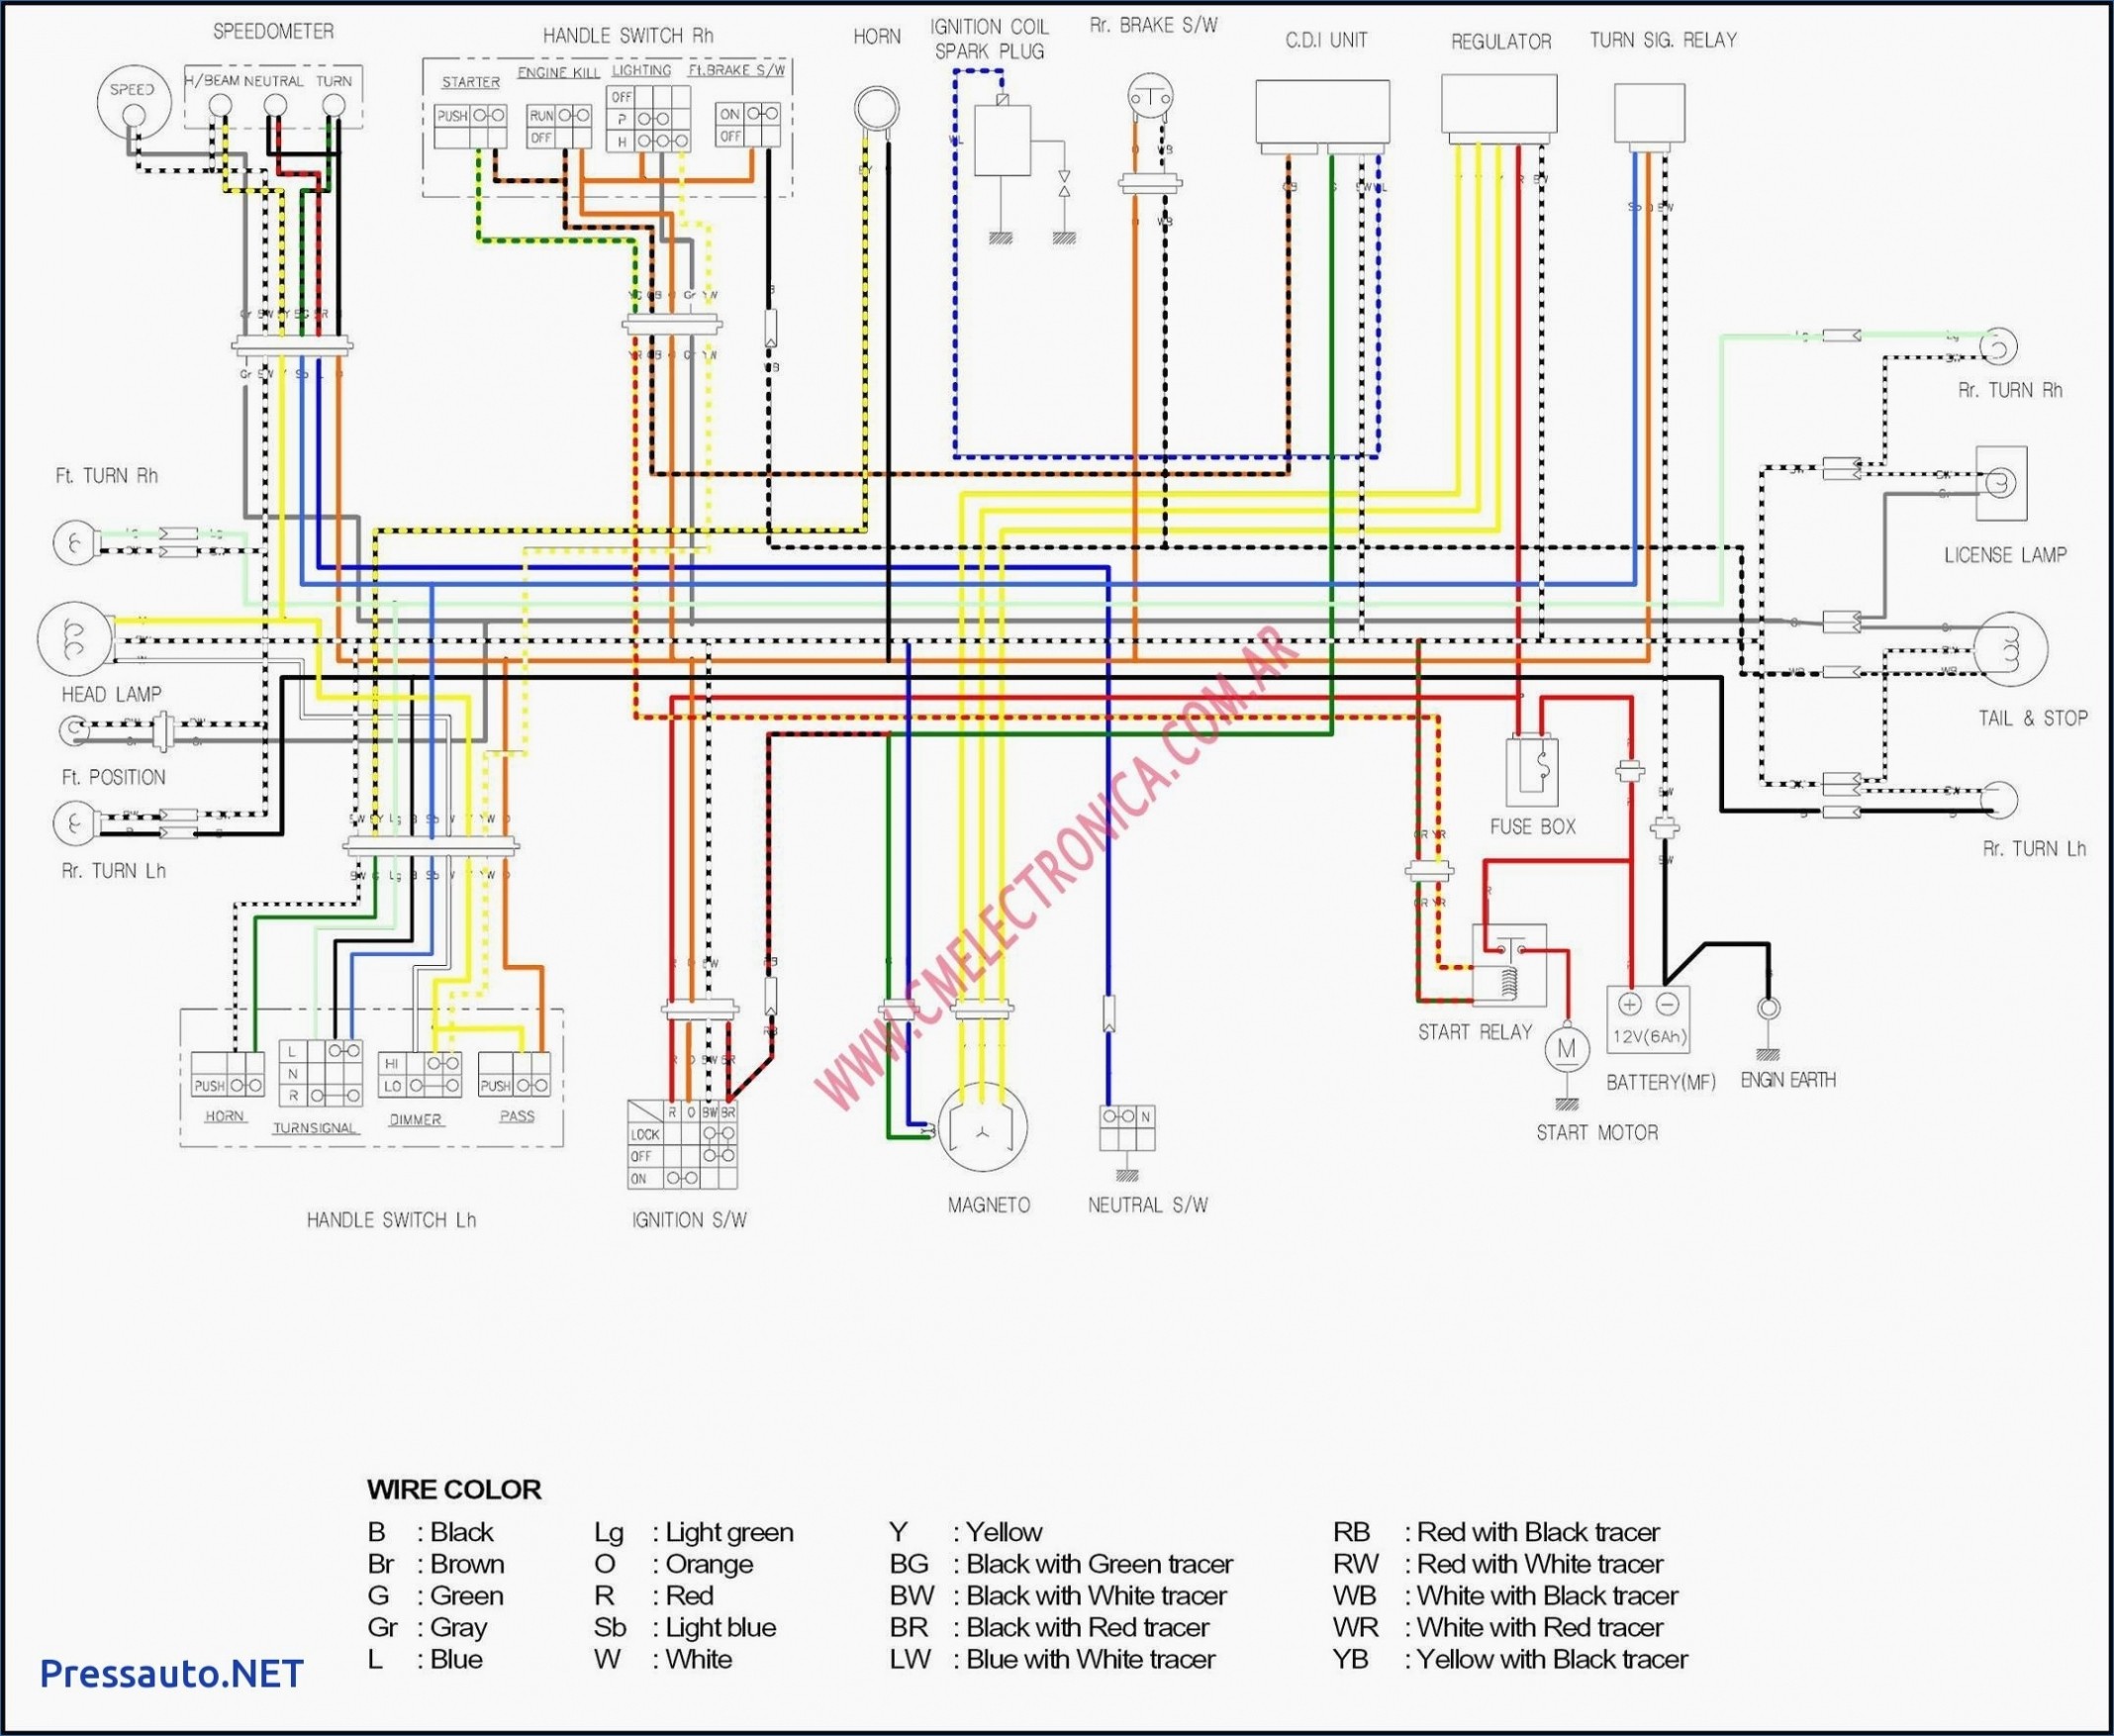 Tao Tao 110 Wiring Diagram 110 Schematic Wiring Diagram with Fuse Wiring Diagram Of Tao Tao 110 Wiring Diagram